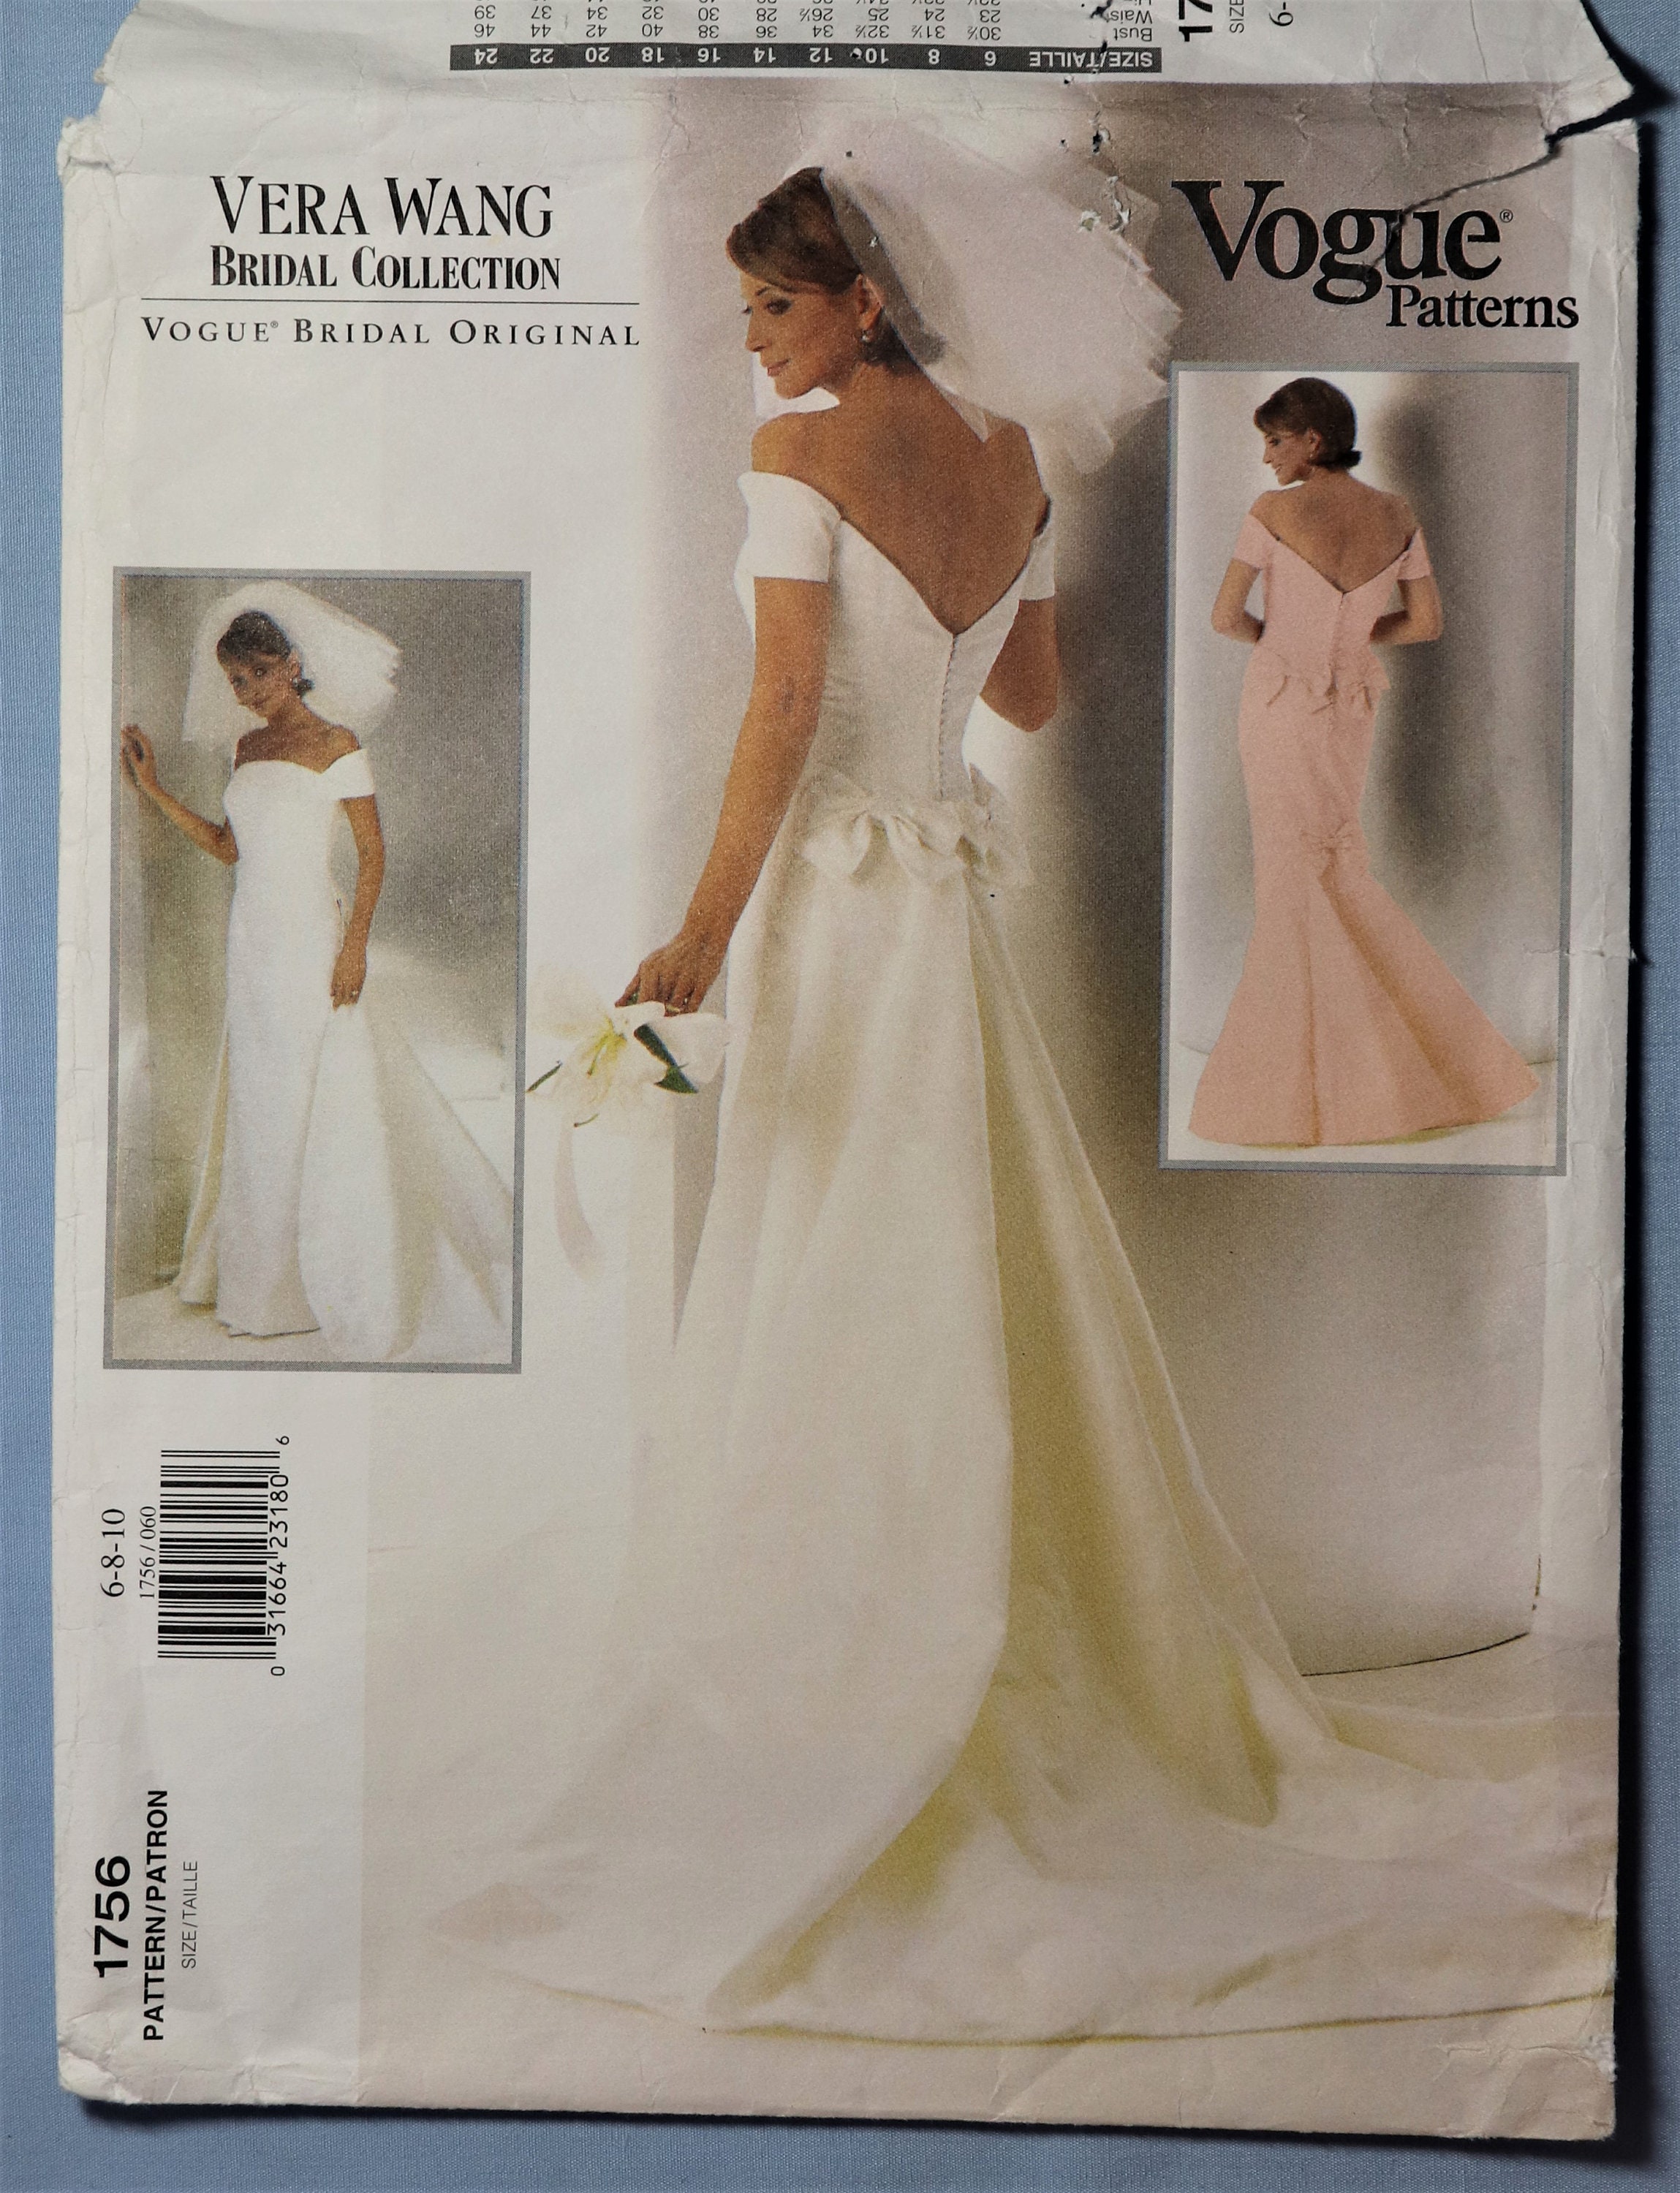 LUCIENNE Vera Wang wedding dress collection2022: Paris Boutique